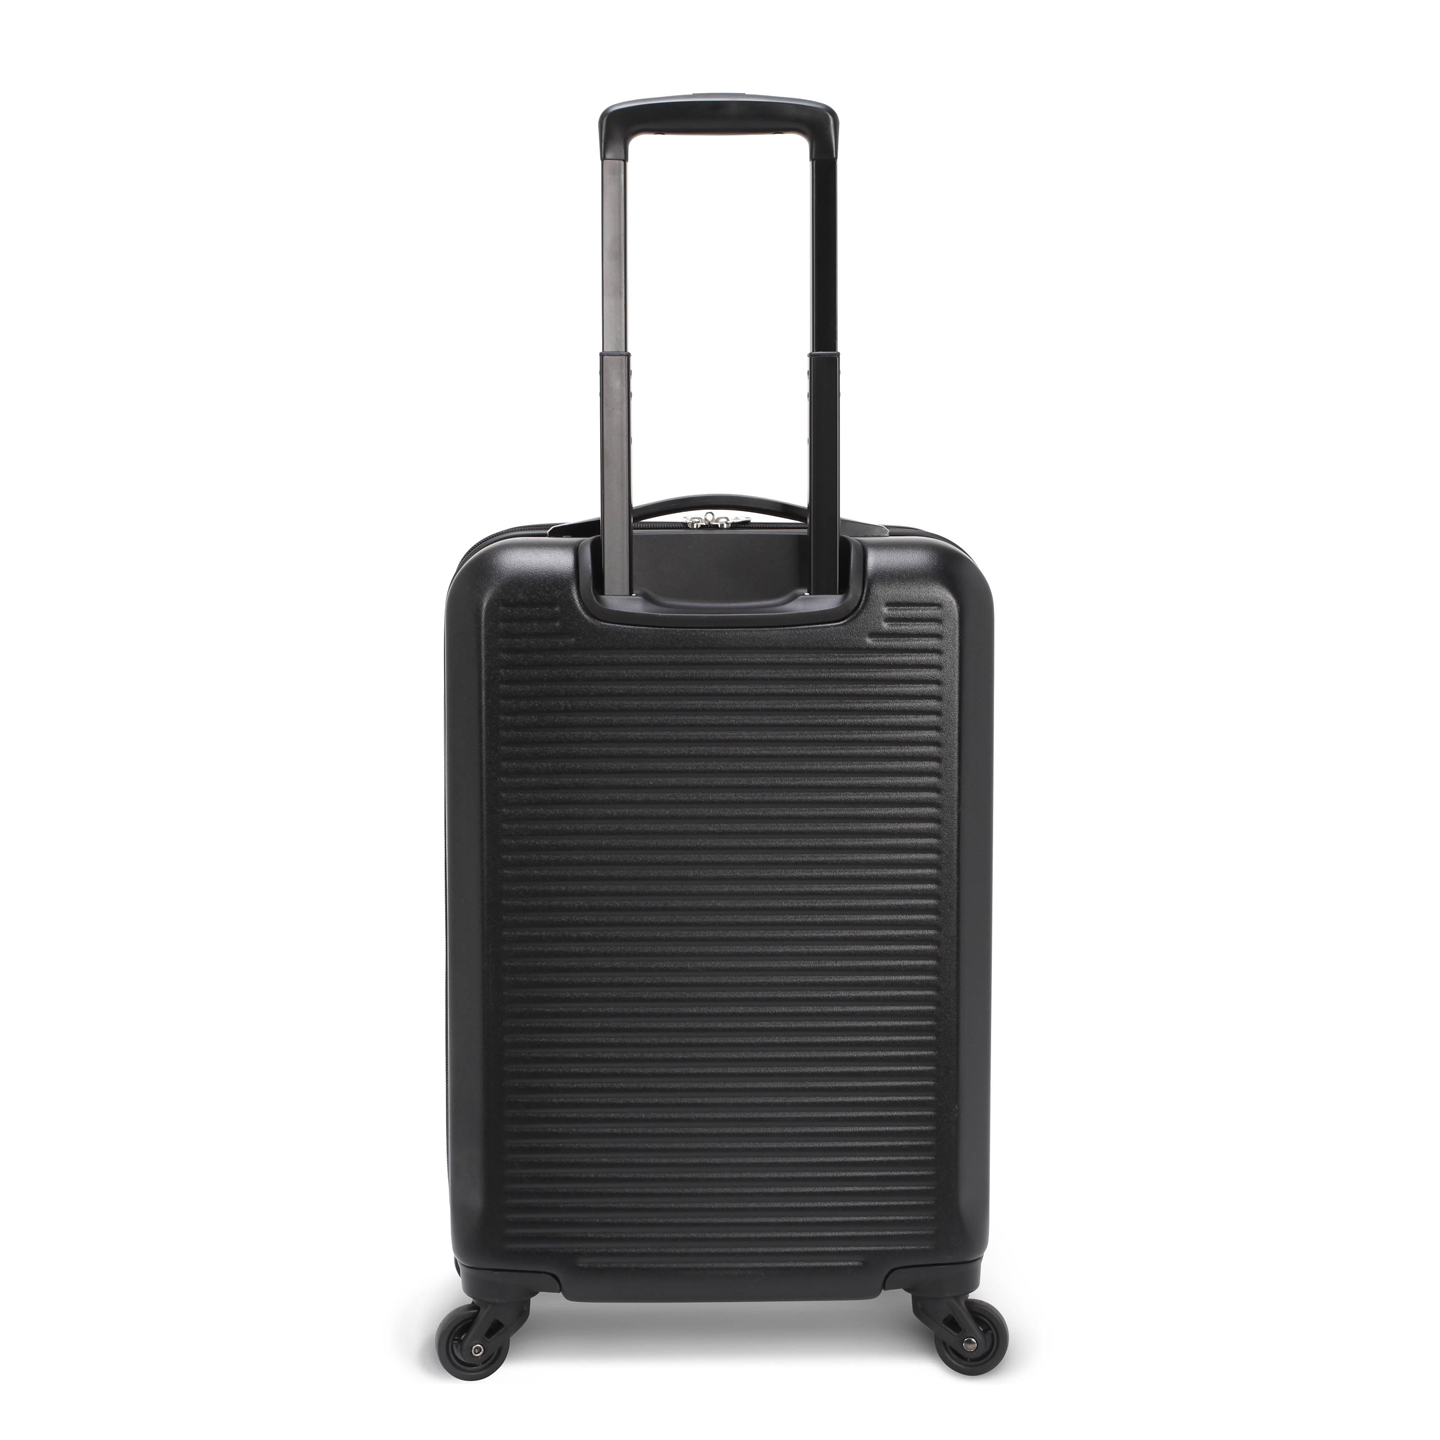 Protege 20 inch Hard Side Carry-On Spinner Luggage, Black Matte Finish ...